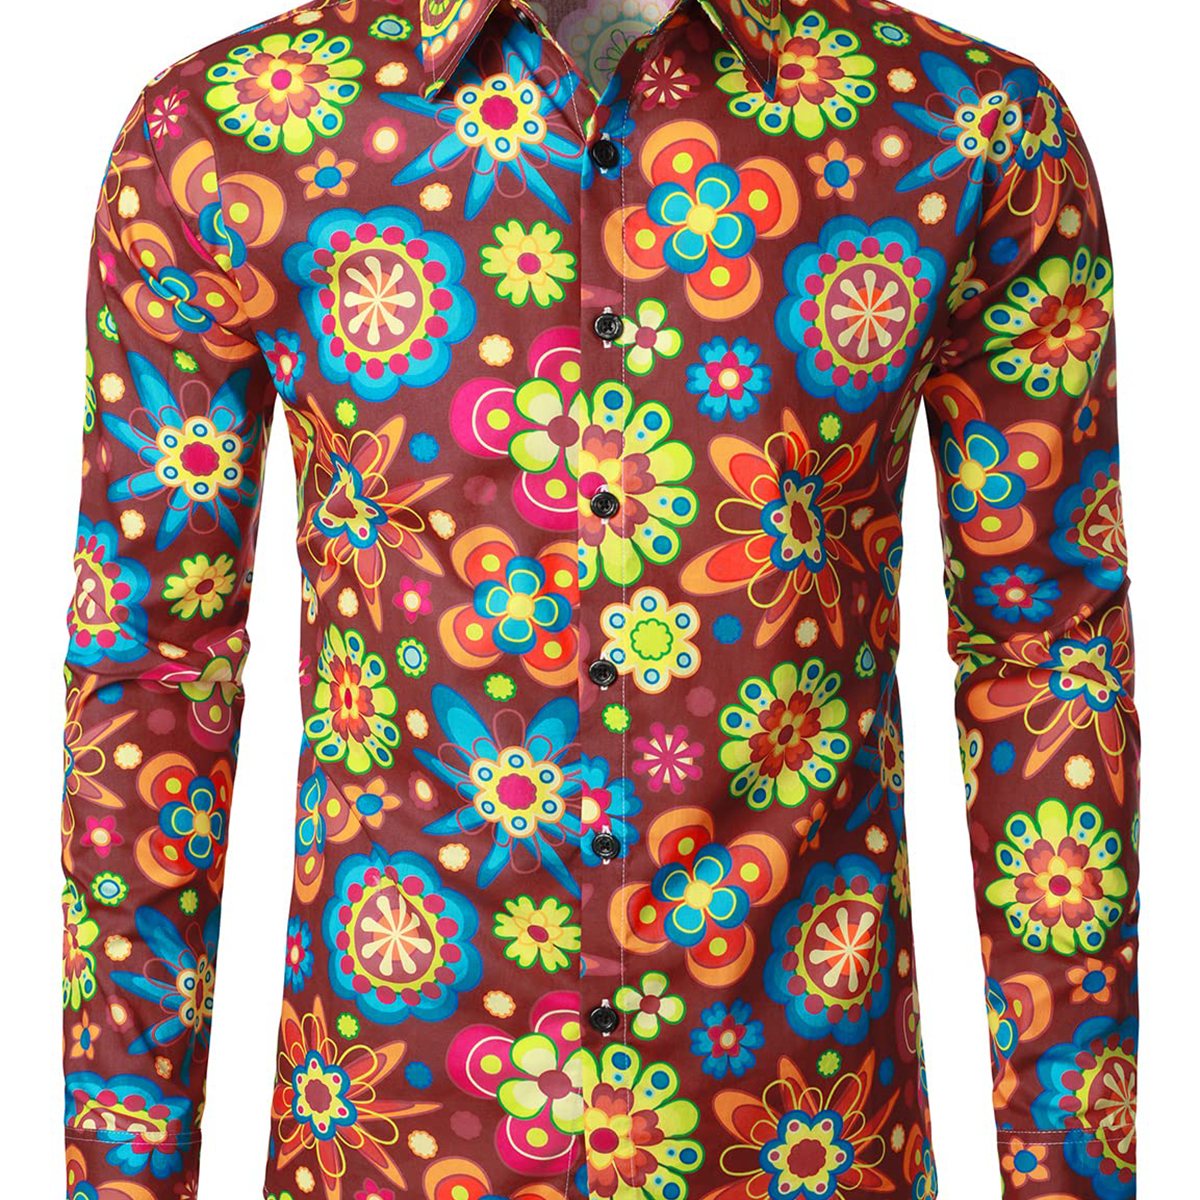 Men's Floral Cotton Party Flower Disco Button Up Long Sleeve Shirt